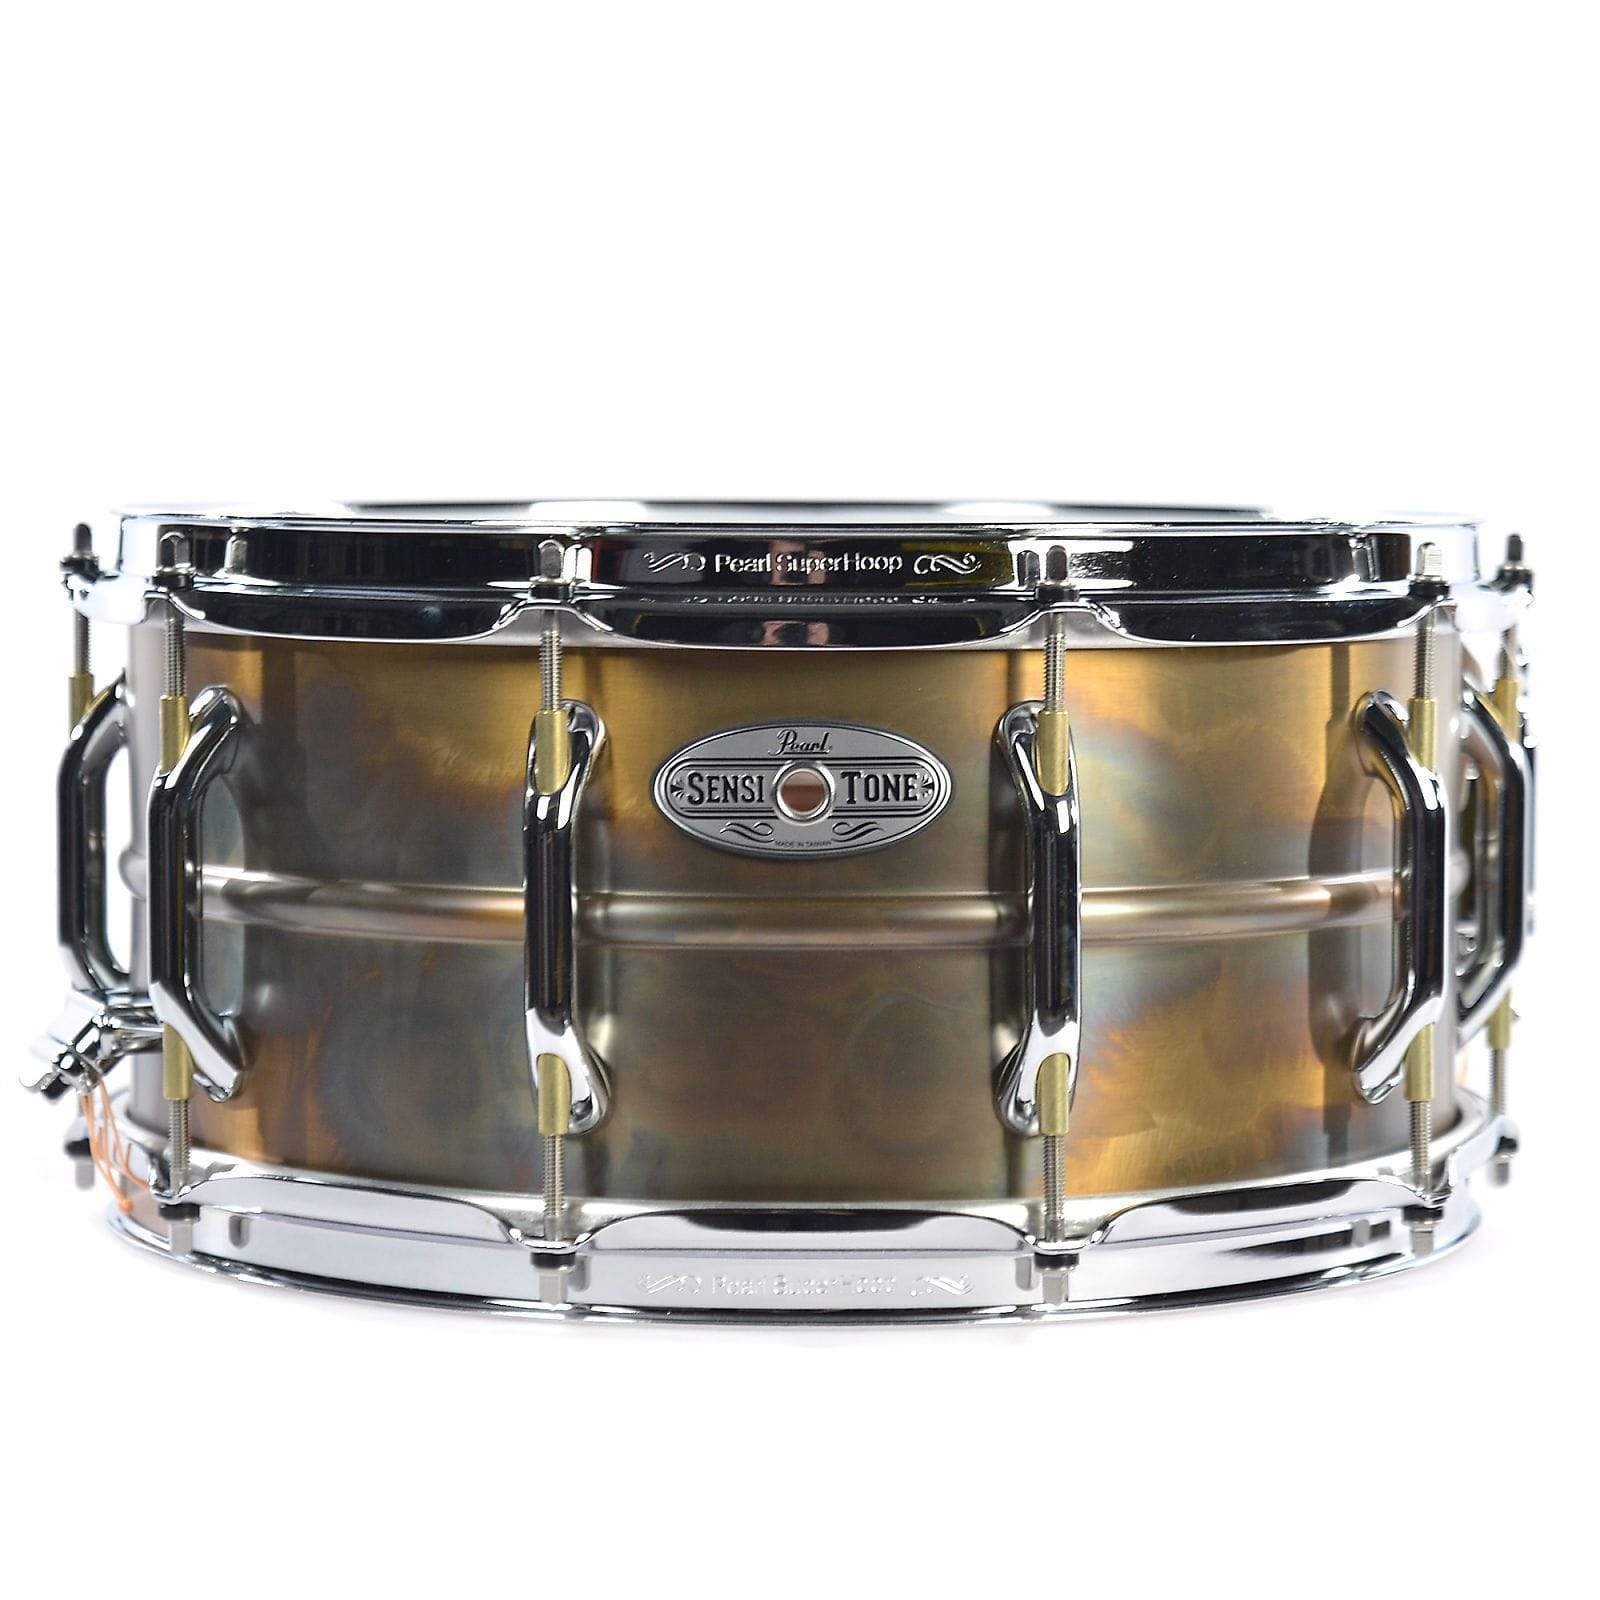 Snare drum - 14 x 5.5 Pearl Sensitone steel : DM Audio Ltd